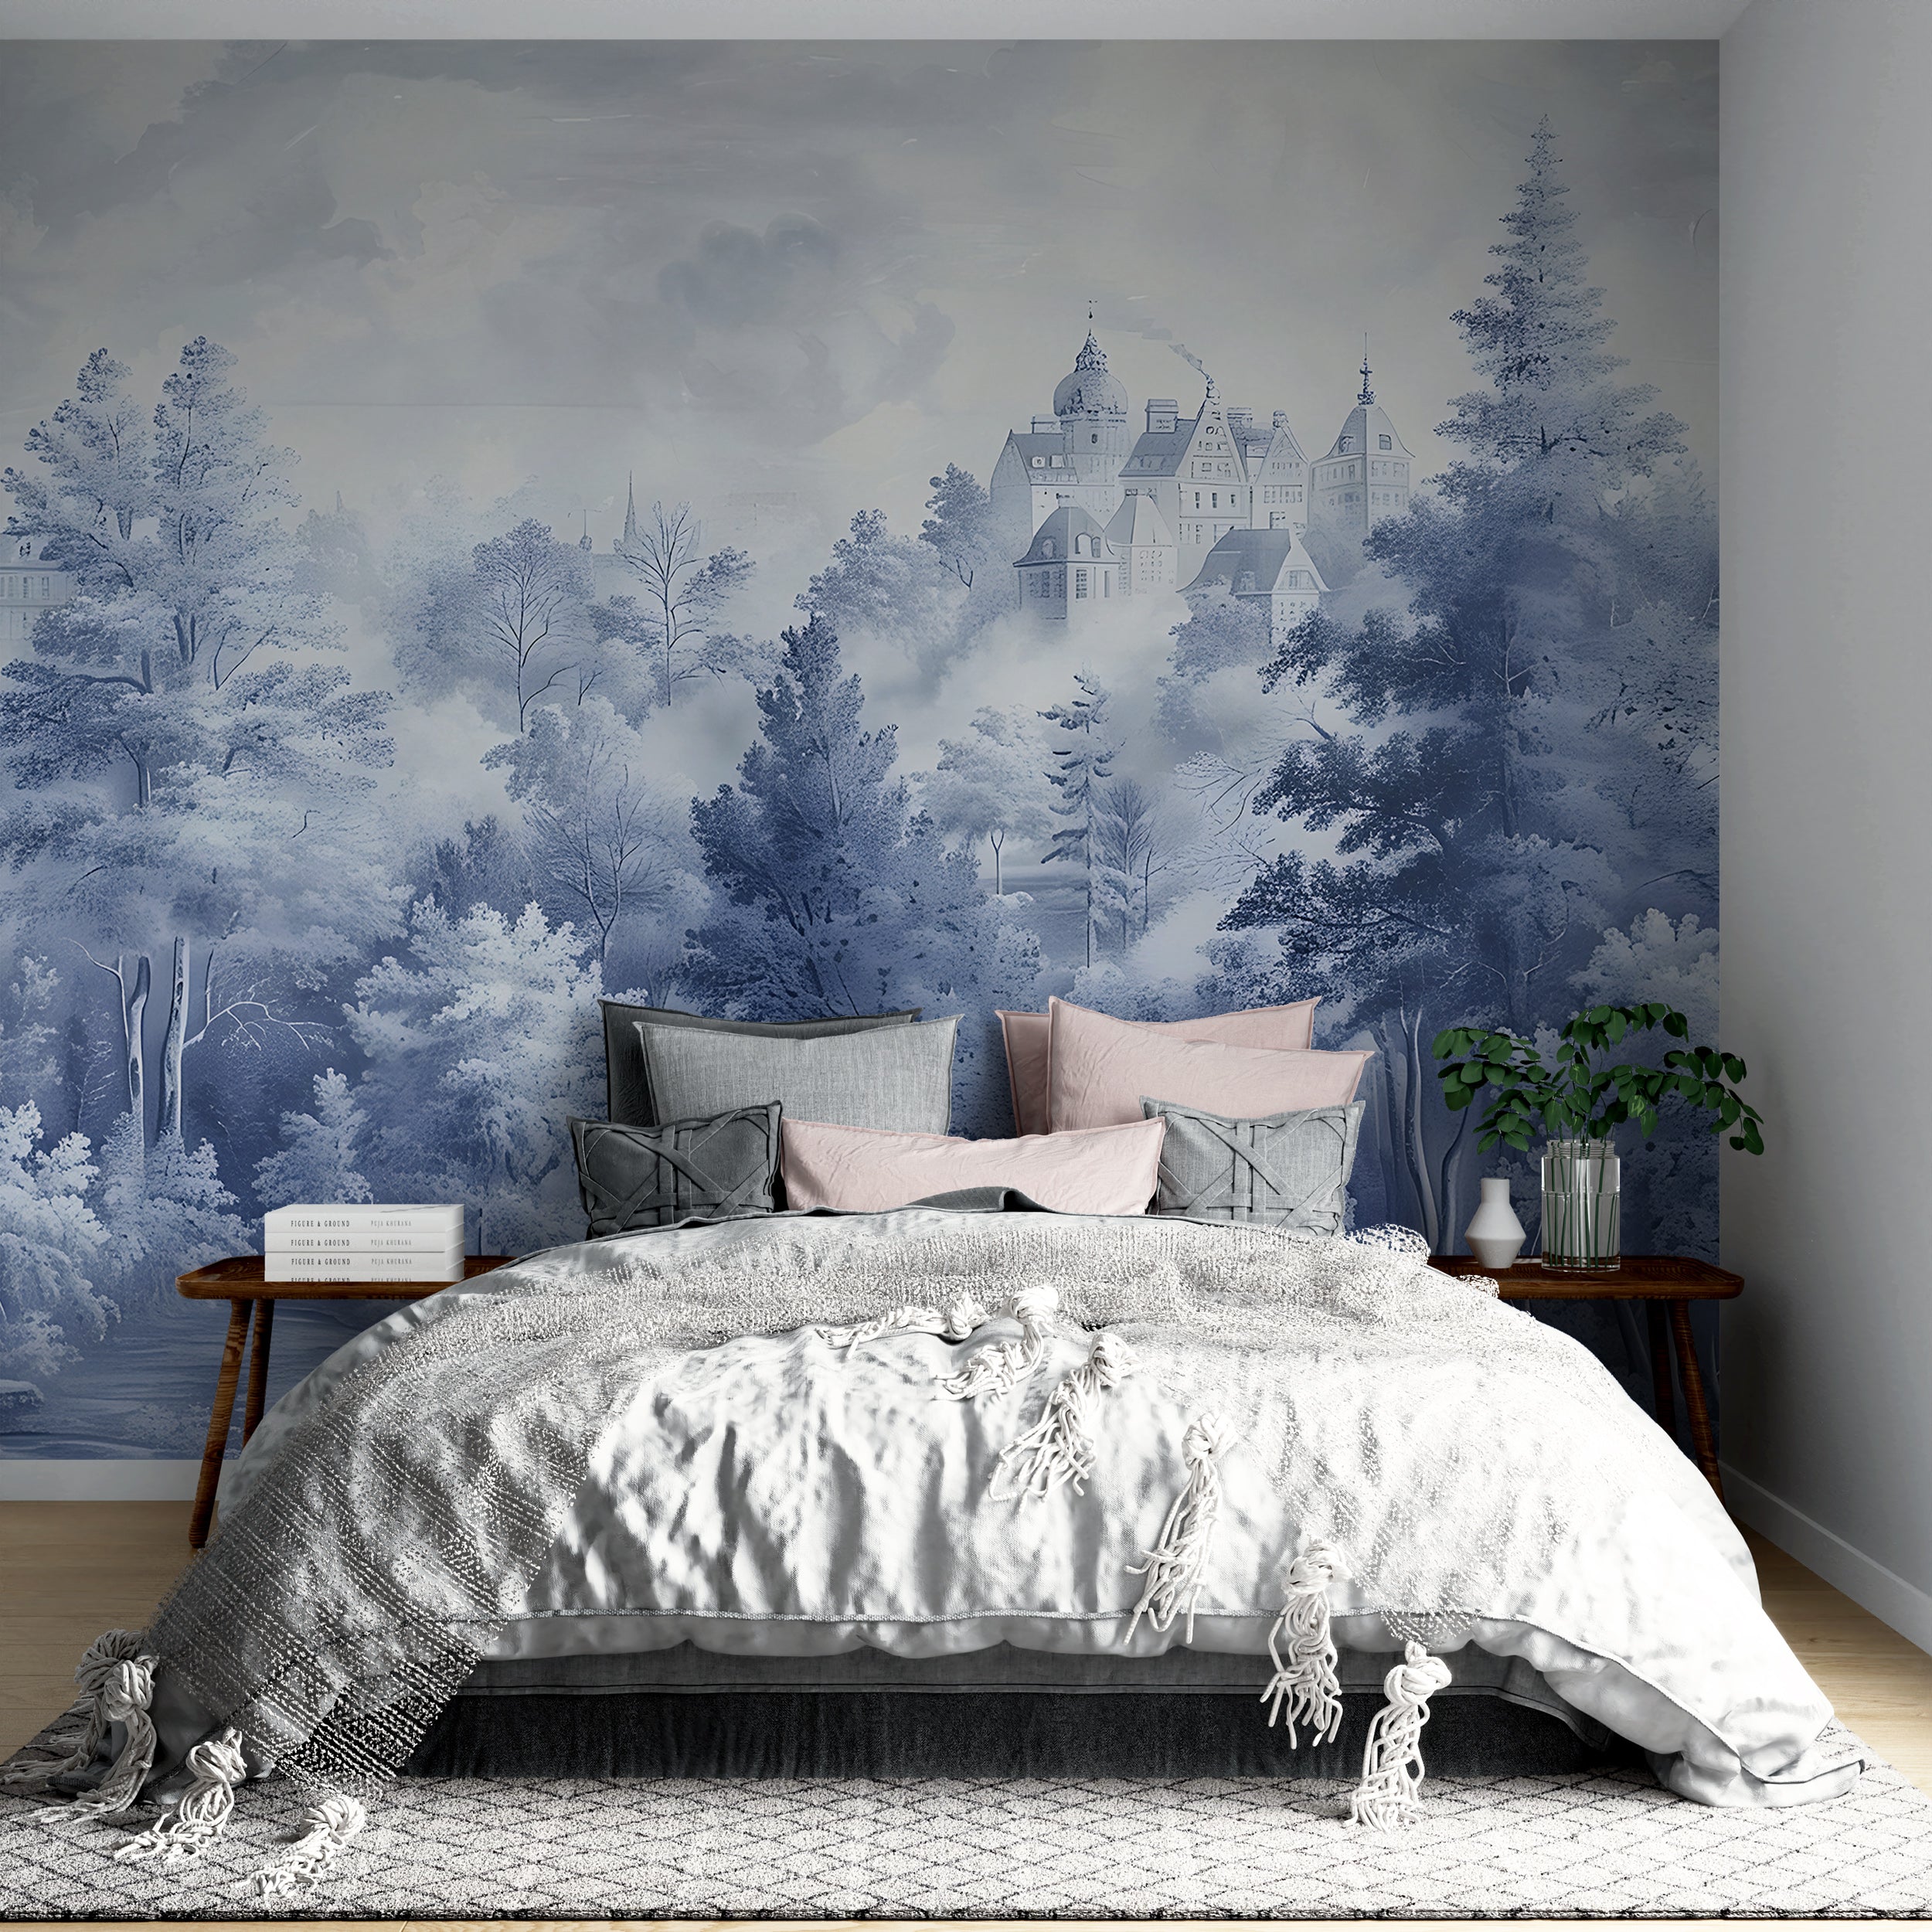 Blue Monochrome Forest Wallpaper Mural Toile de Jouy Style Peel and Stick Decor